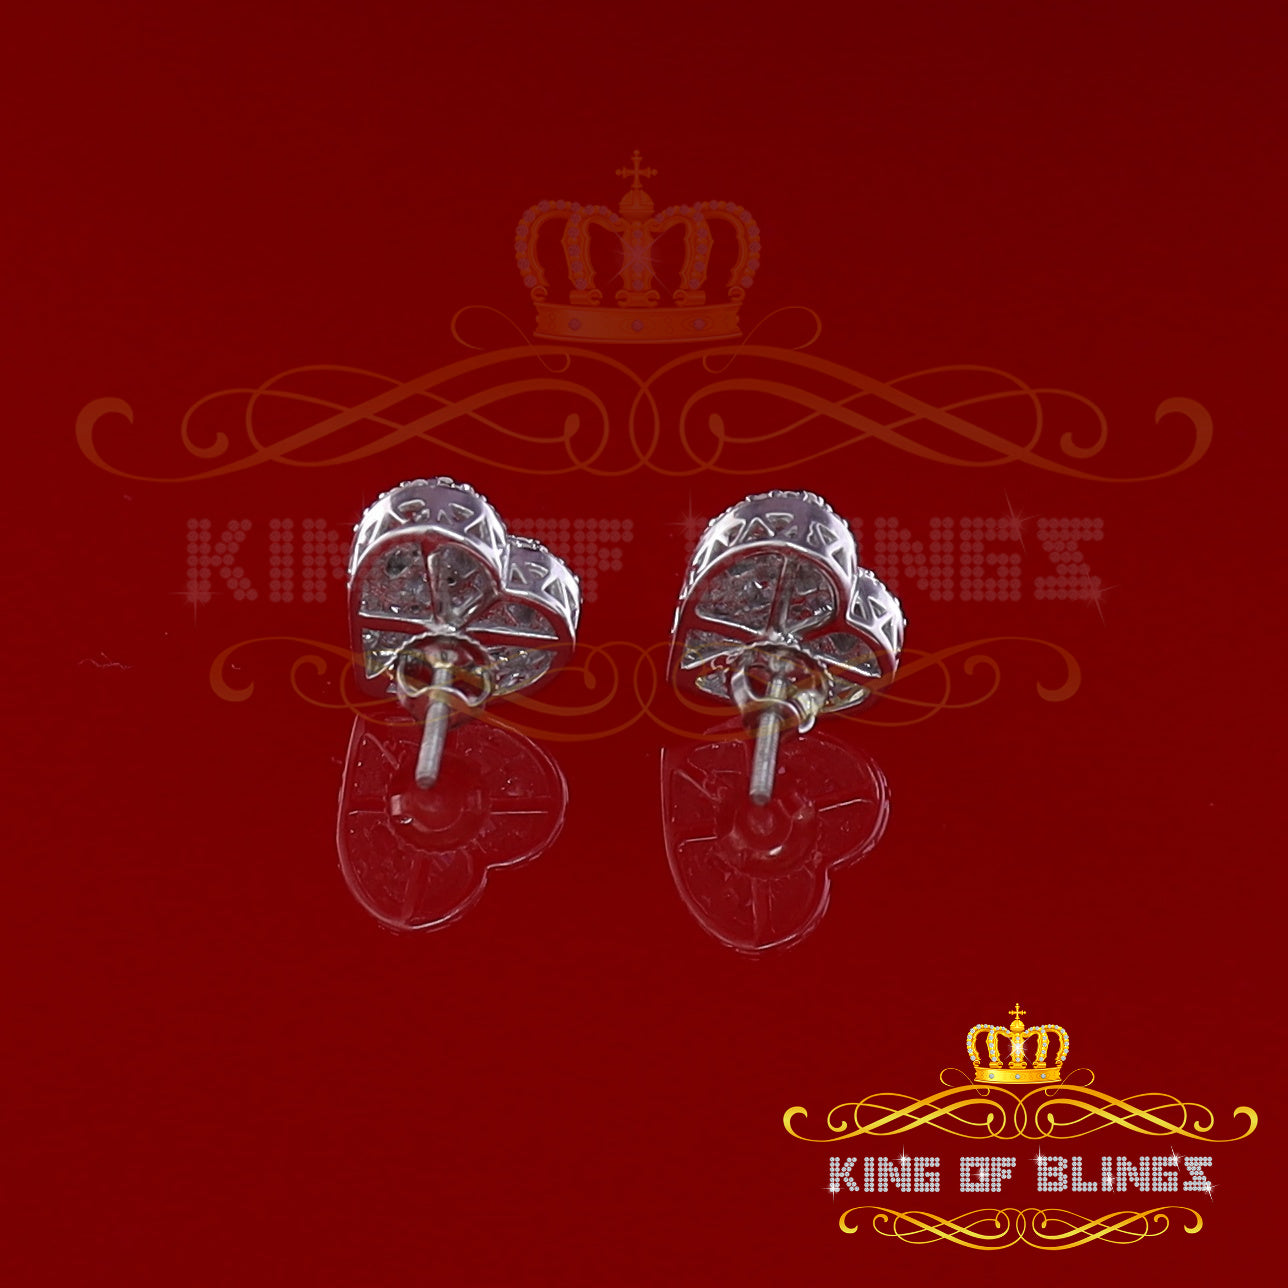 King of Blings- 925 White Sterling Silver 1.48ct Cubic Zirconia Men's & Women's Heart Earrings KING OF BLINGS